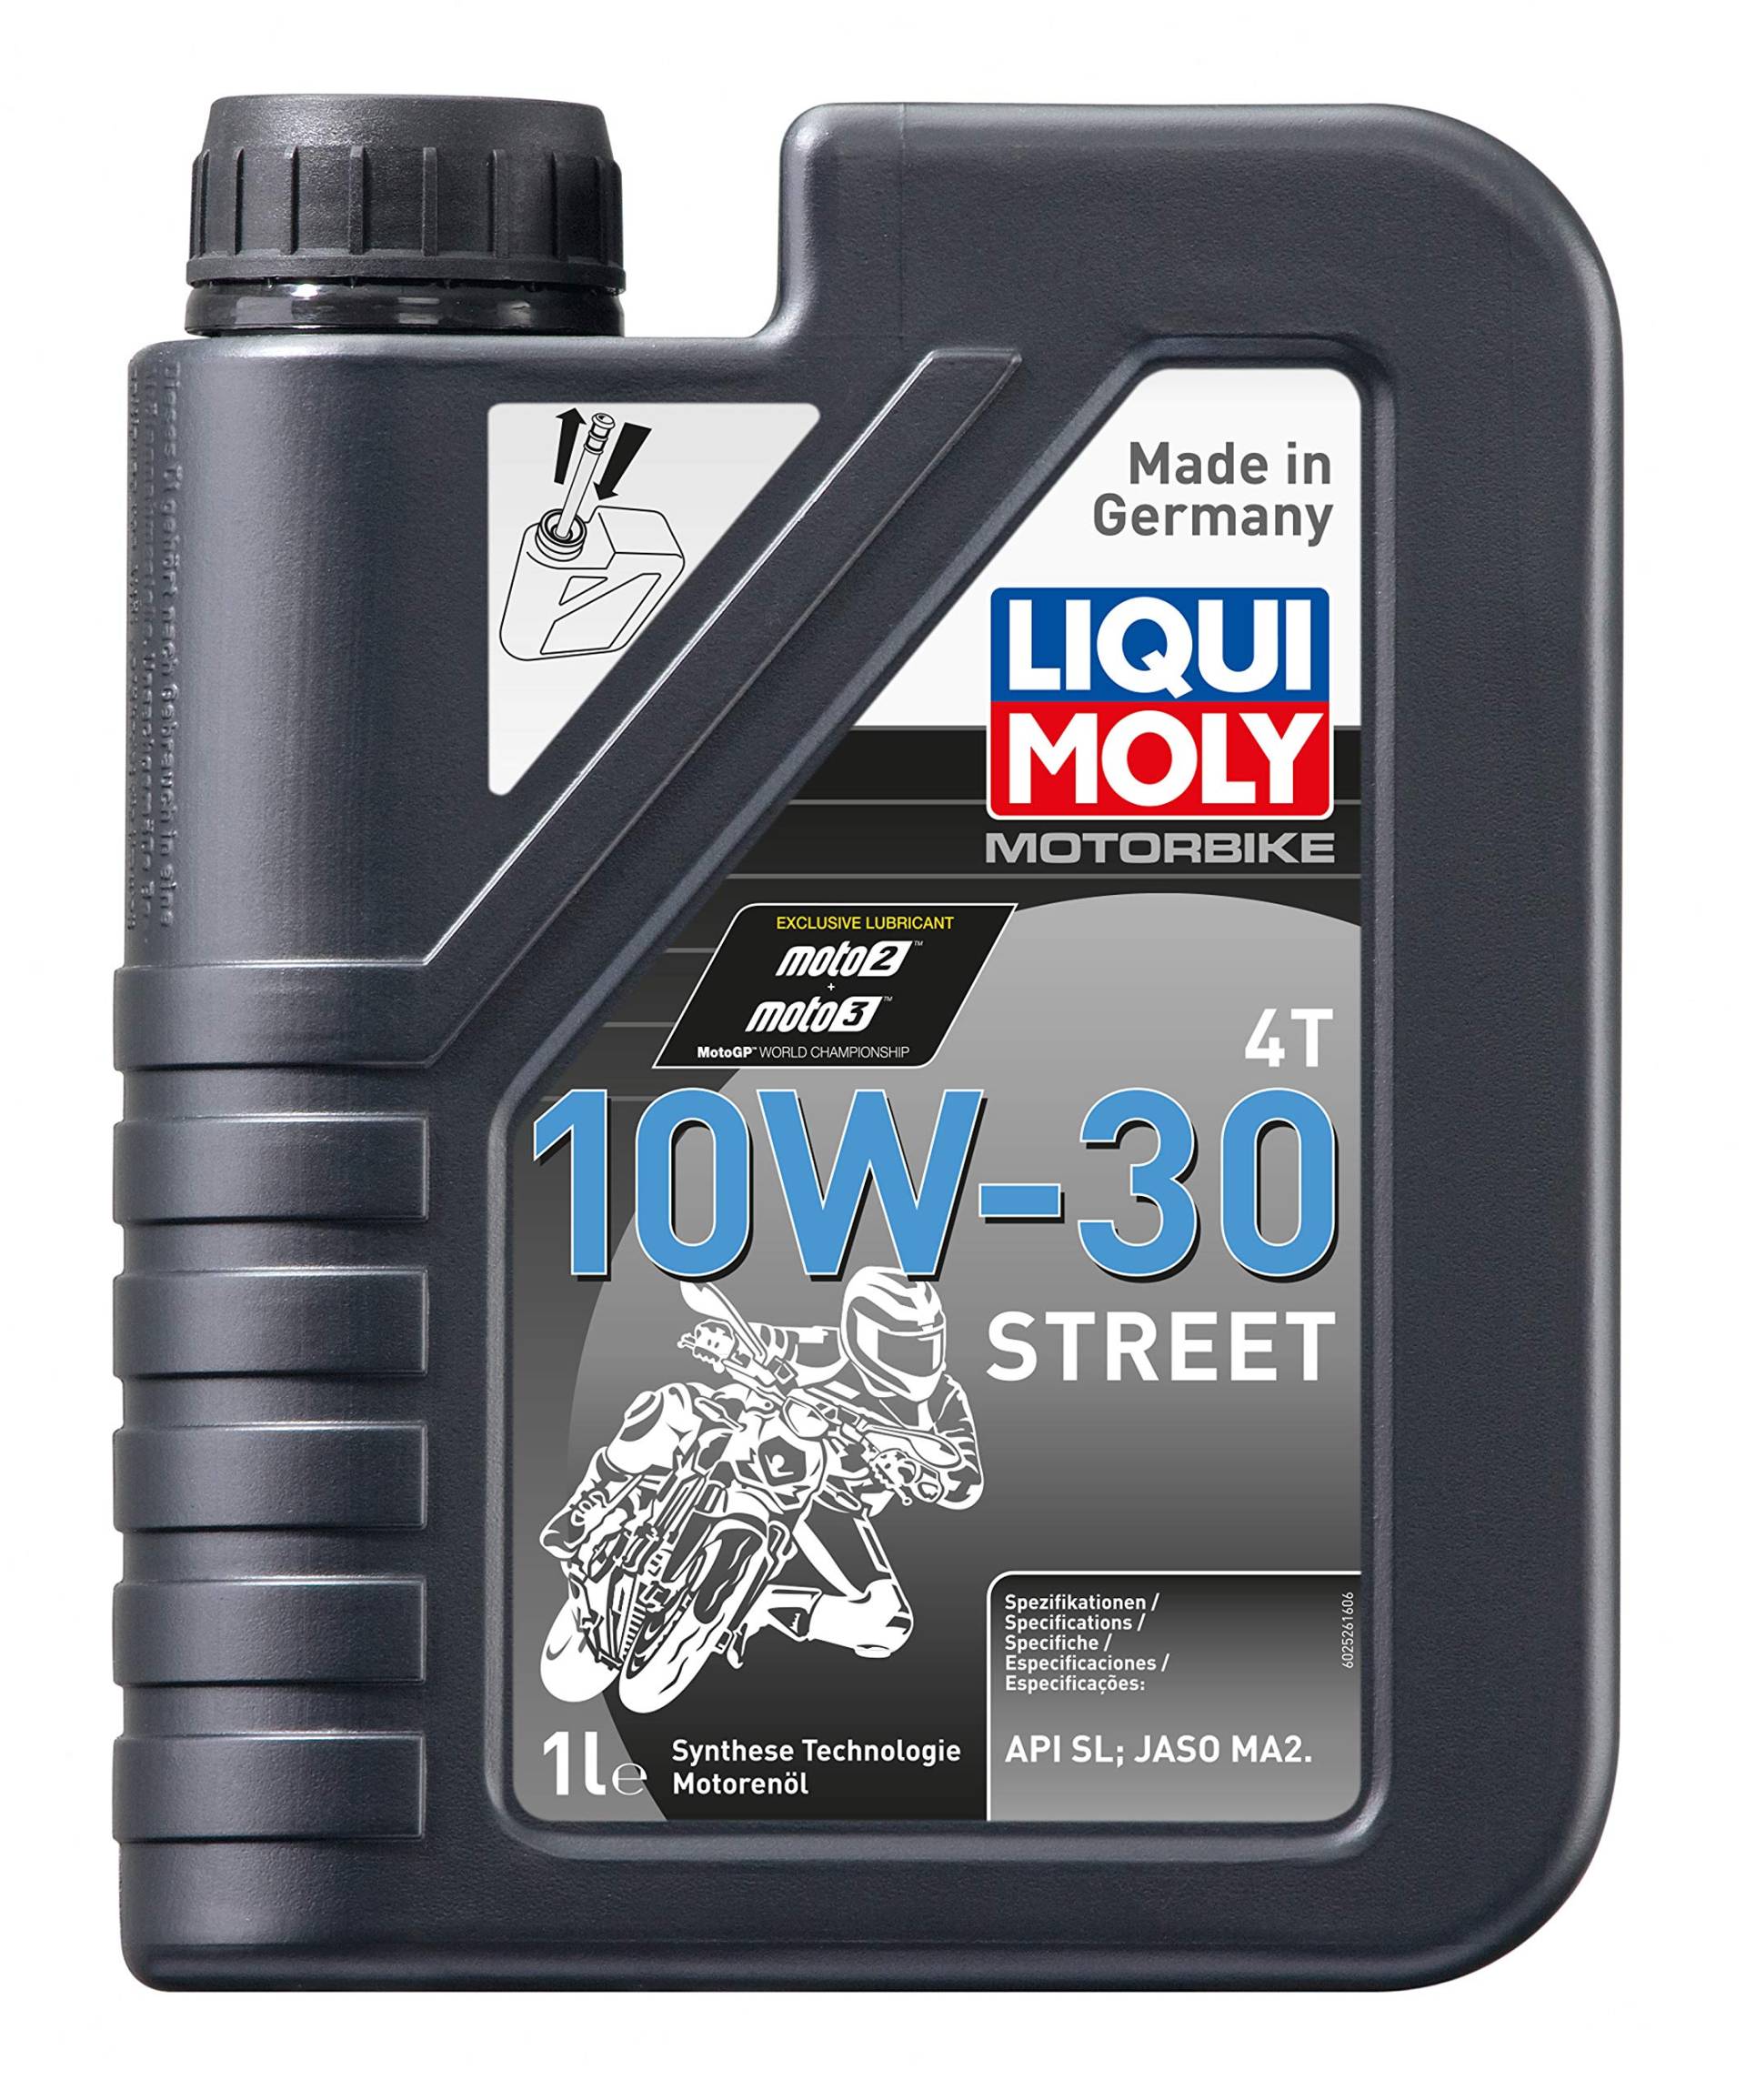 LIQUI MOLY Motorbike 4T 10W-30 Street | 4 L | Motorrad Synthesetechnologie Motoröl | Art.-Nr.: 1688 von Liqui Moly